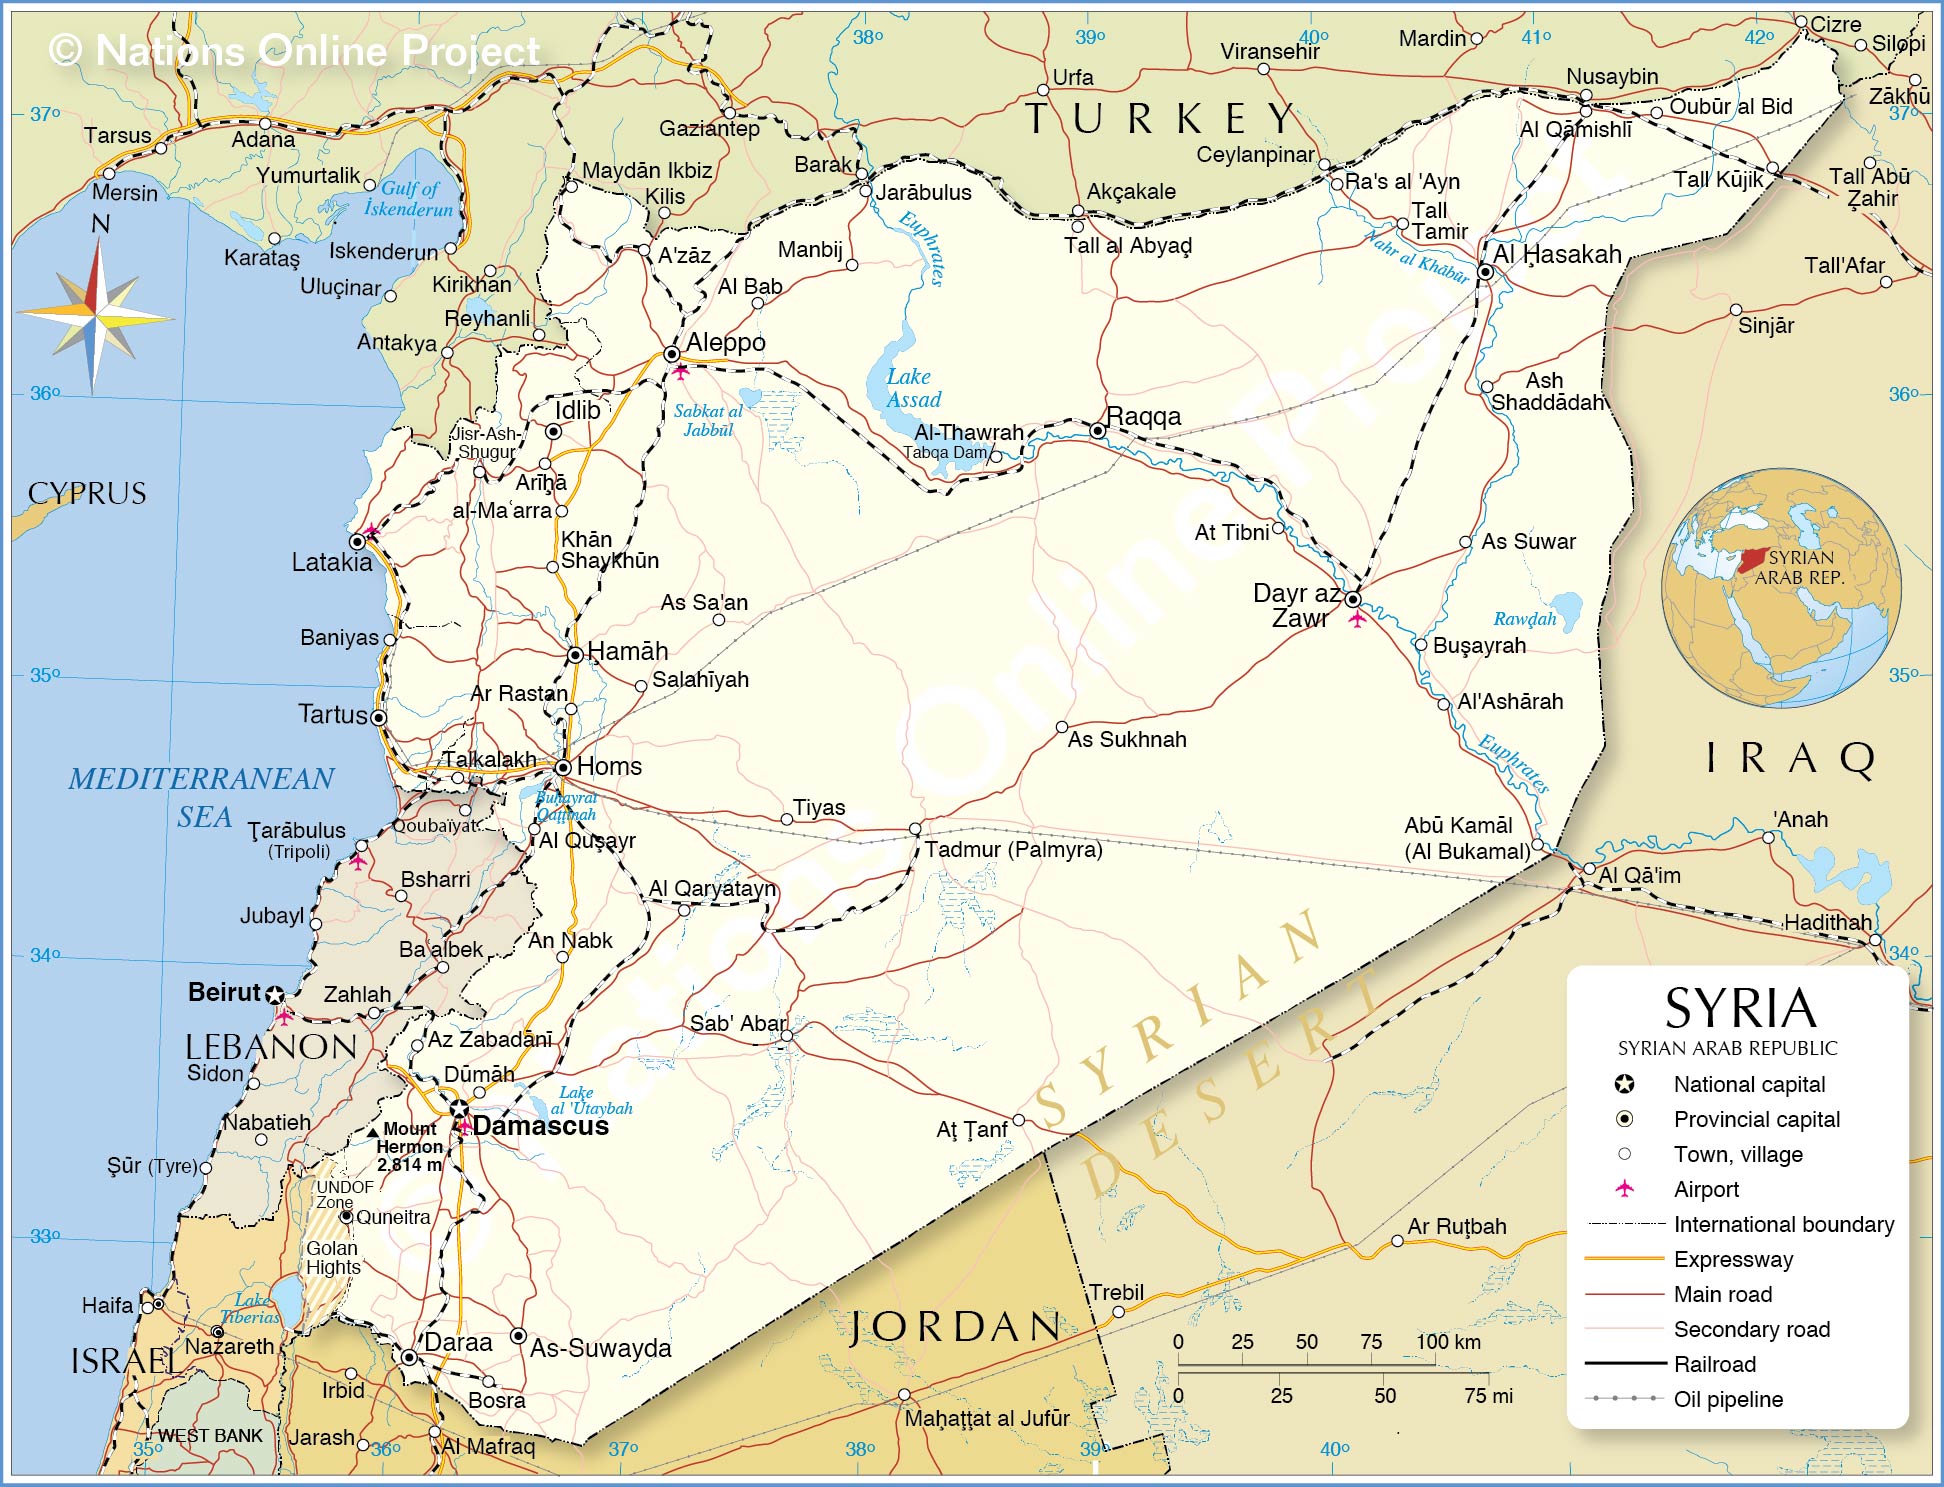 SYRIA MAP